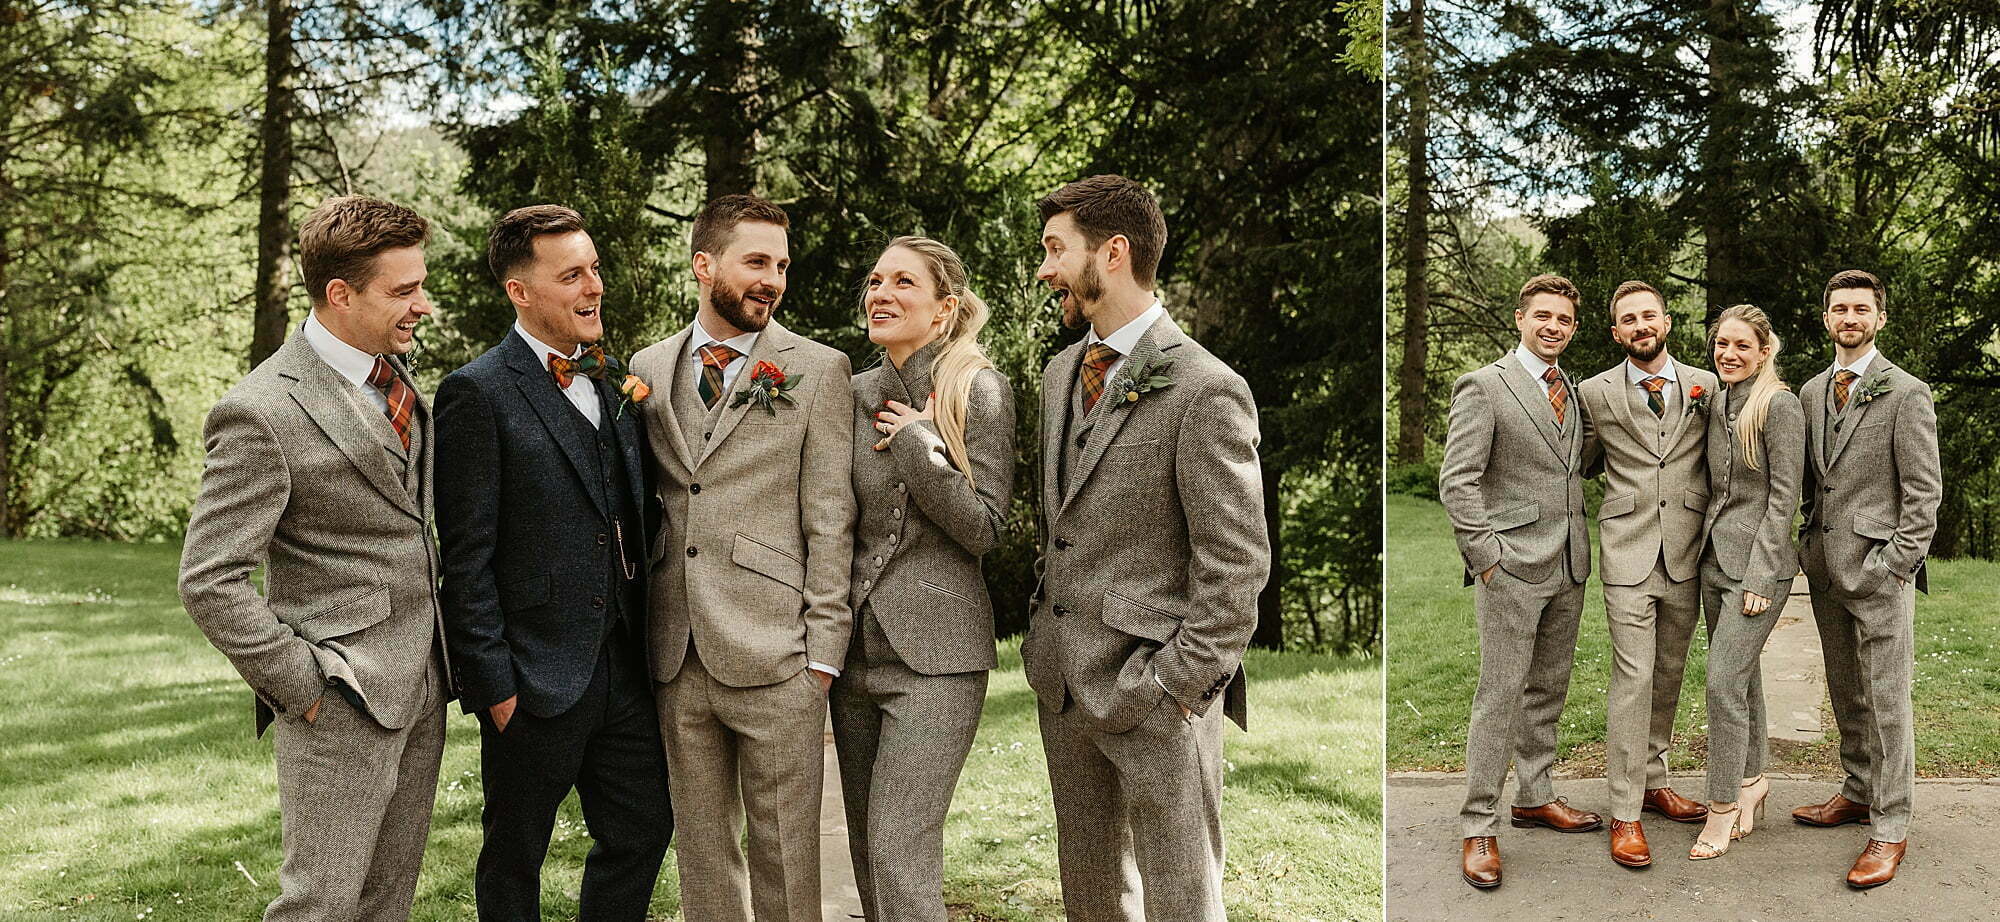 drumtochty castle family portraits group photographs outside groomsmen groomswomen walker slater suits